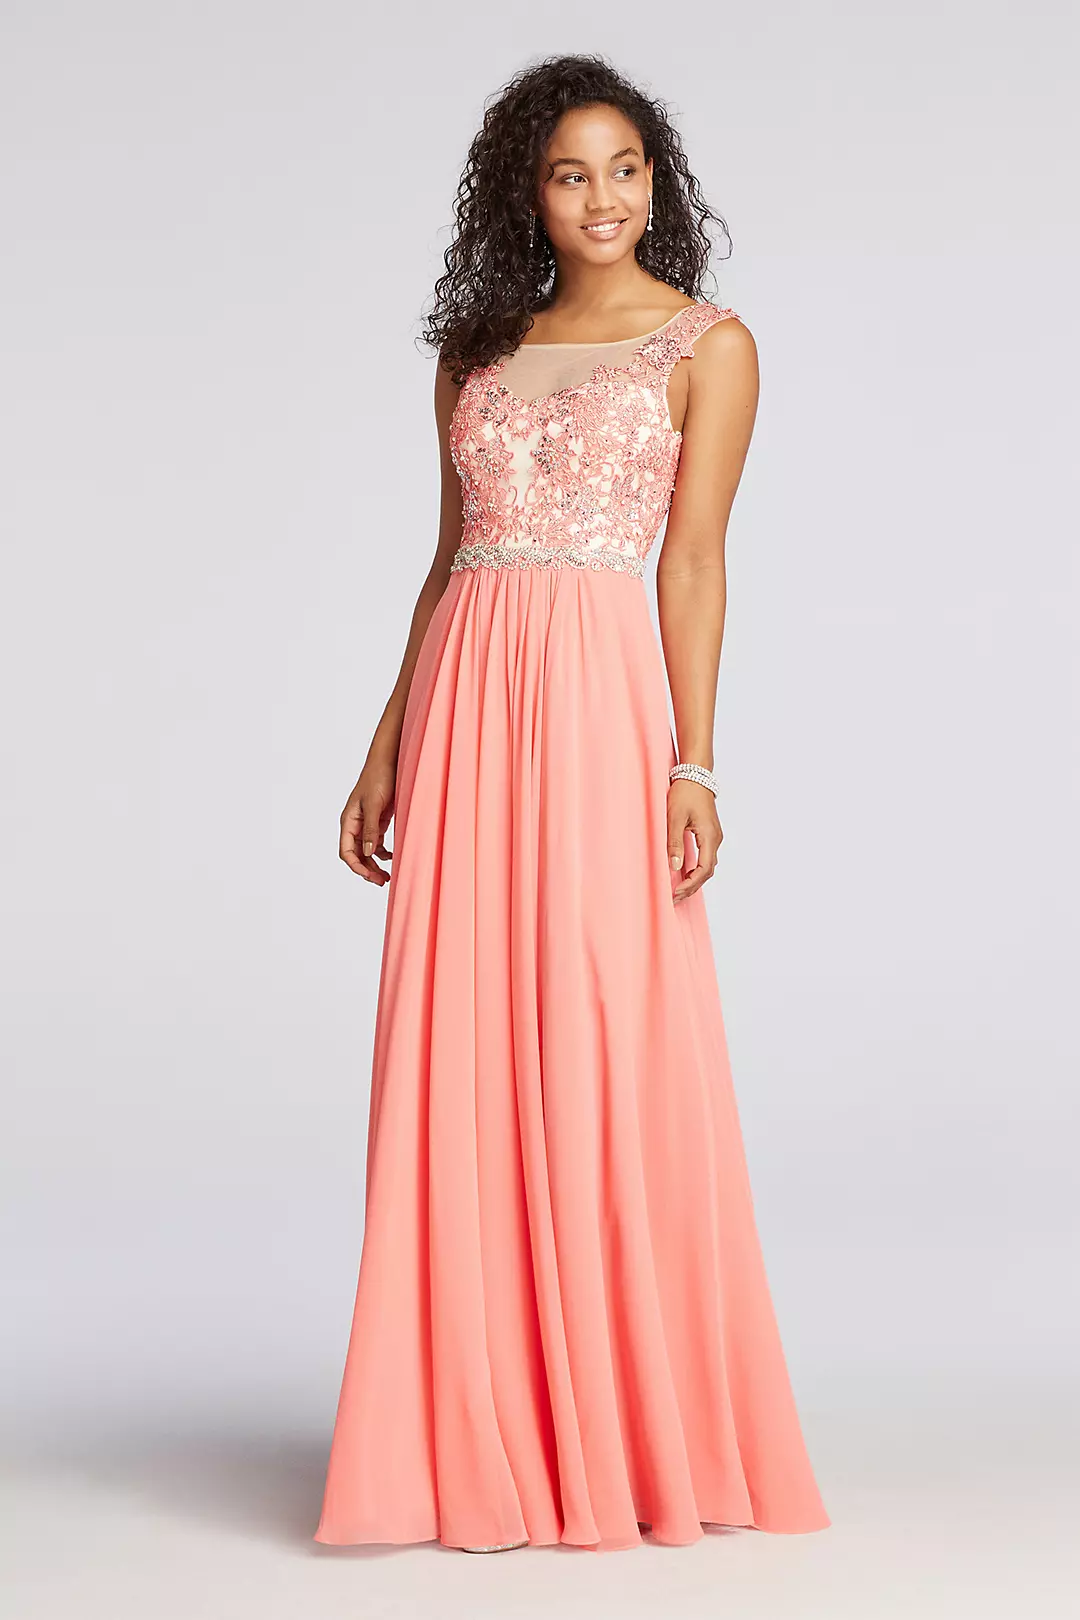 Cap Sleeve Chiffon and Lace Prom Dress  Image